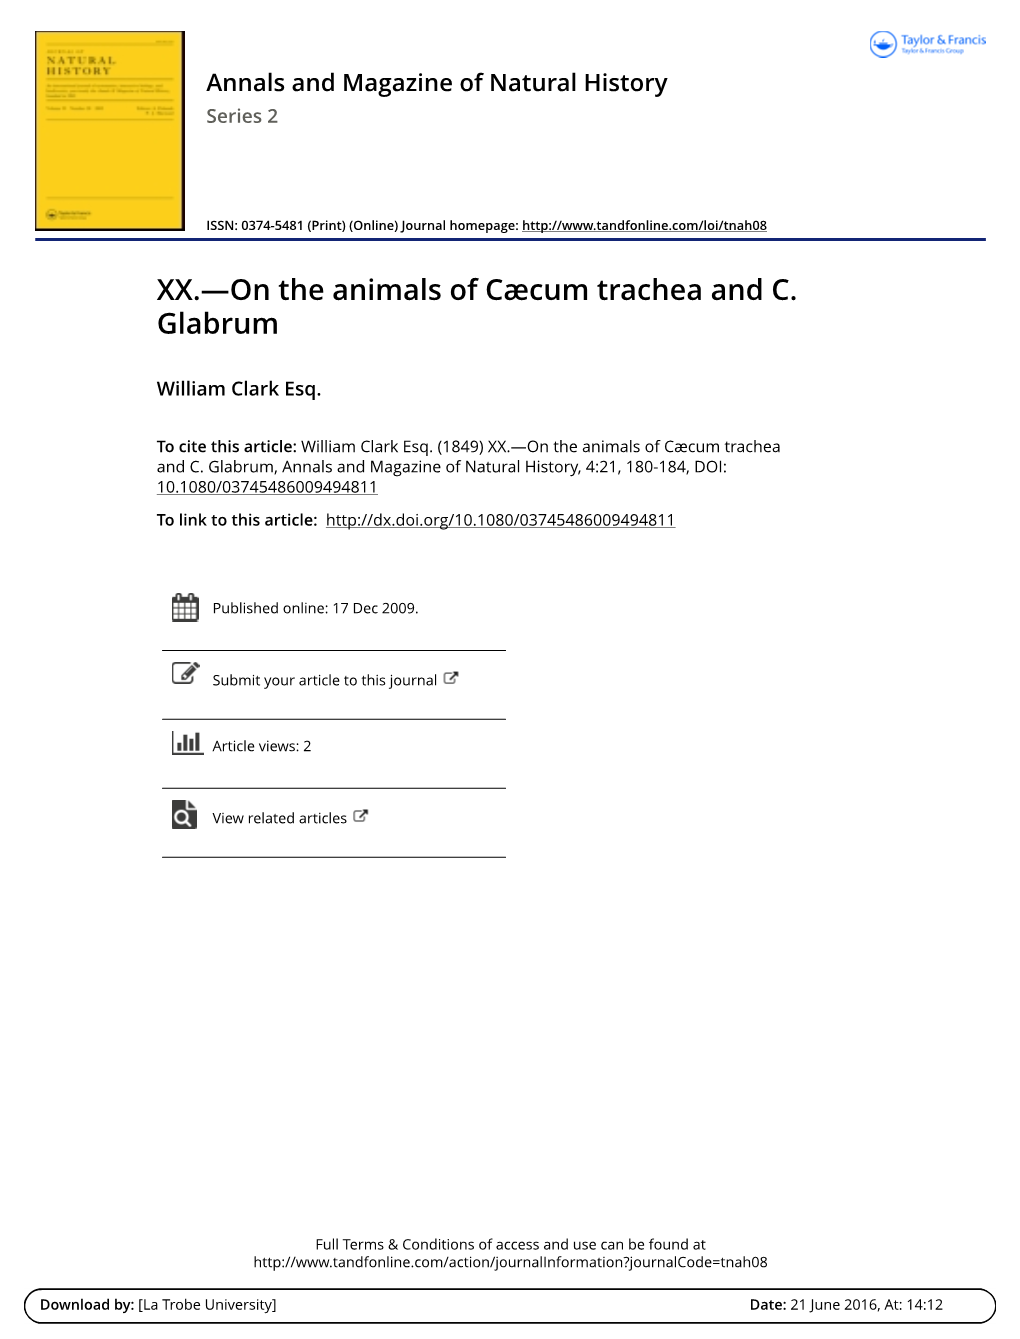 XX.—On the Animals of Cæcum Trachea and C. Glabrum